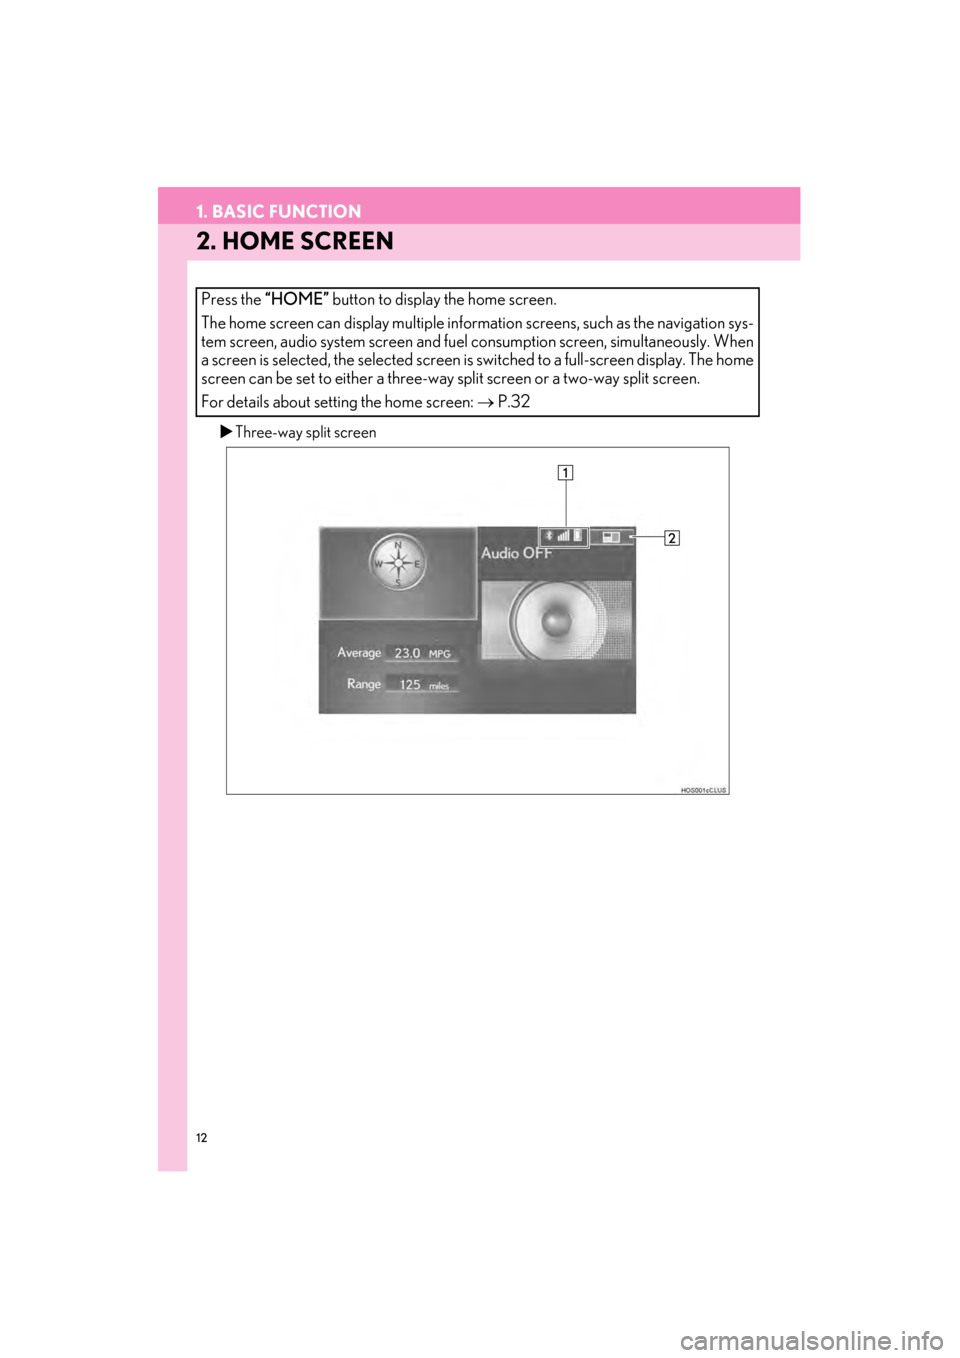 Lexus GX460 2015  Navigation Manual 12
1. BASIC FUNCTION
GX460_Navi_OM60L77U_(U)14.06.02     10:48
2. HOME SCREEN
�XThree-way split screen
Press the  “HOME”  button to display the home screen.
The home screen can display multiple in